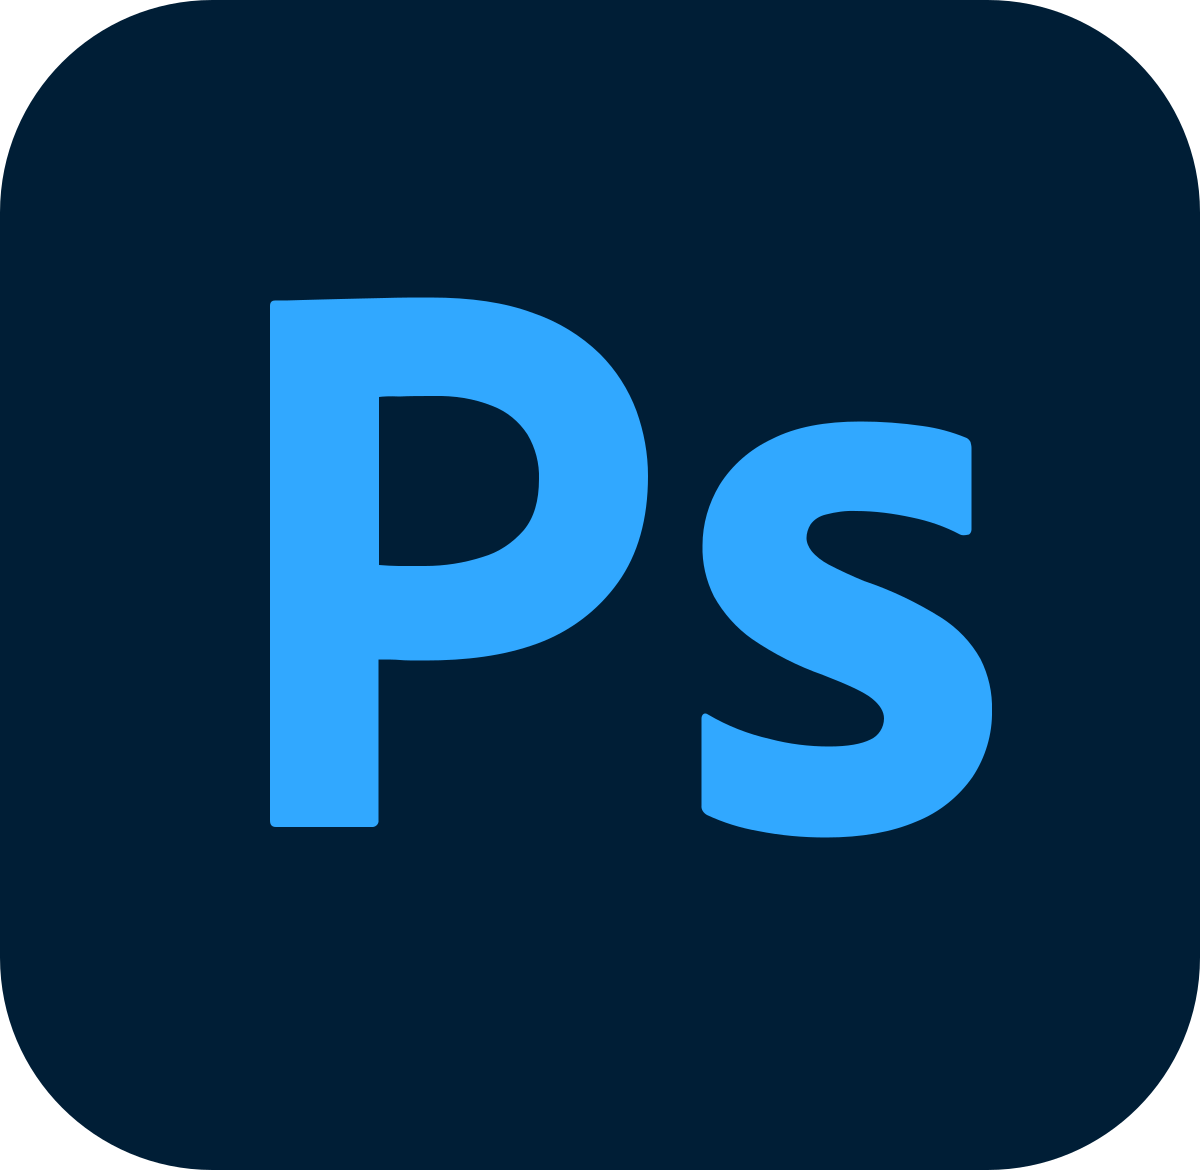 Download Photoshop Cc 2014 Mac